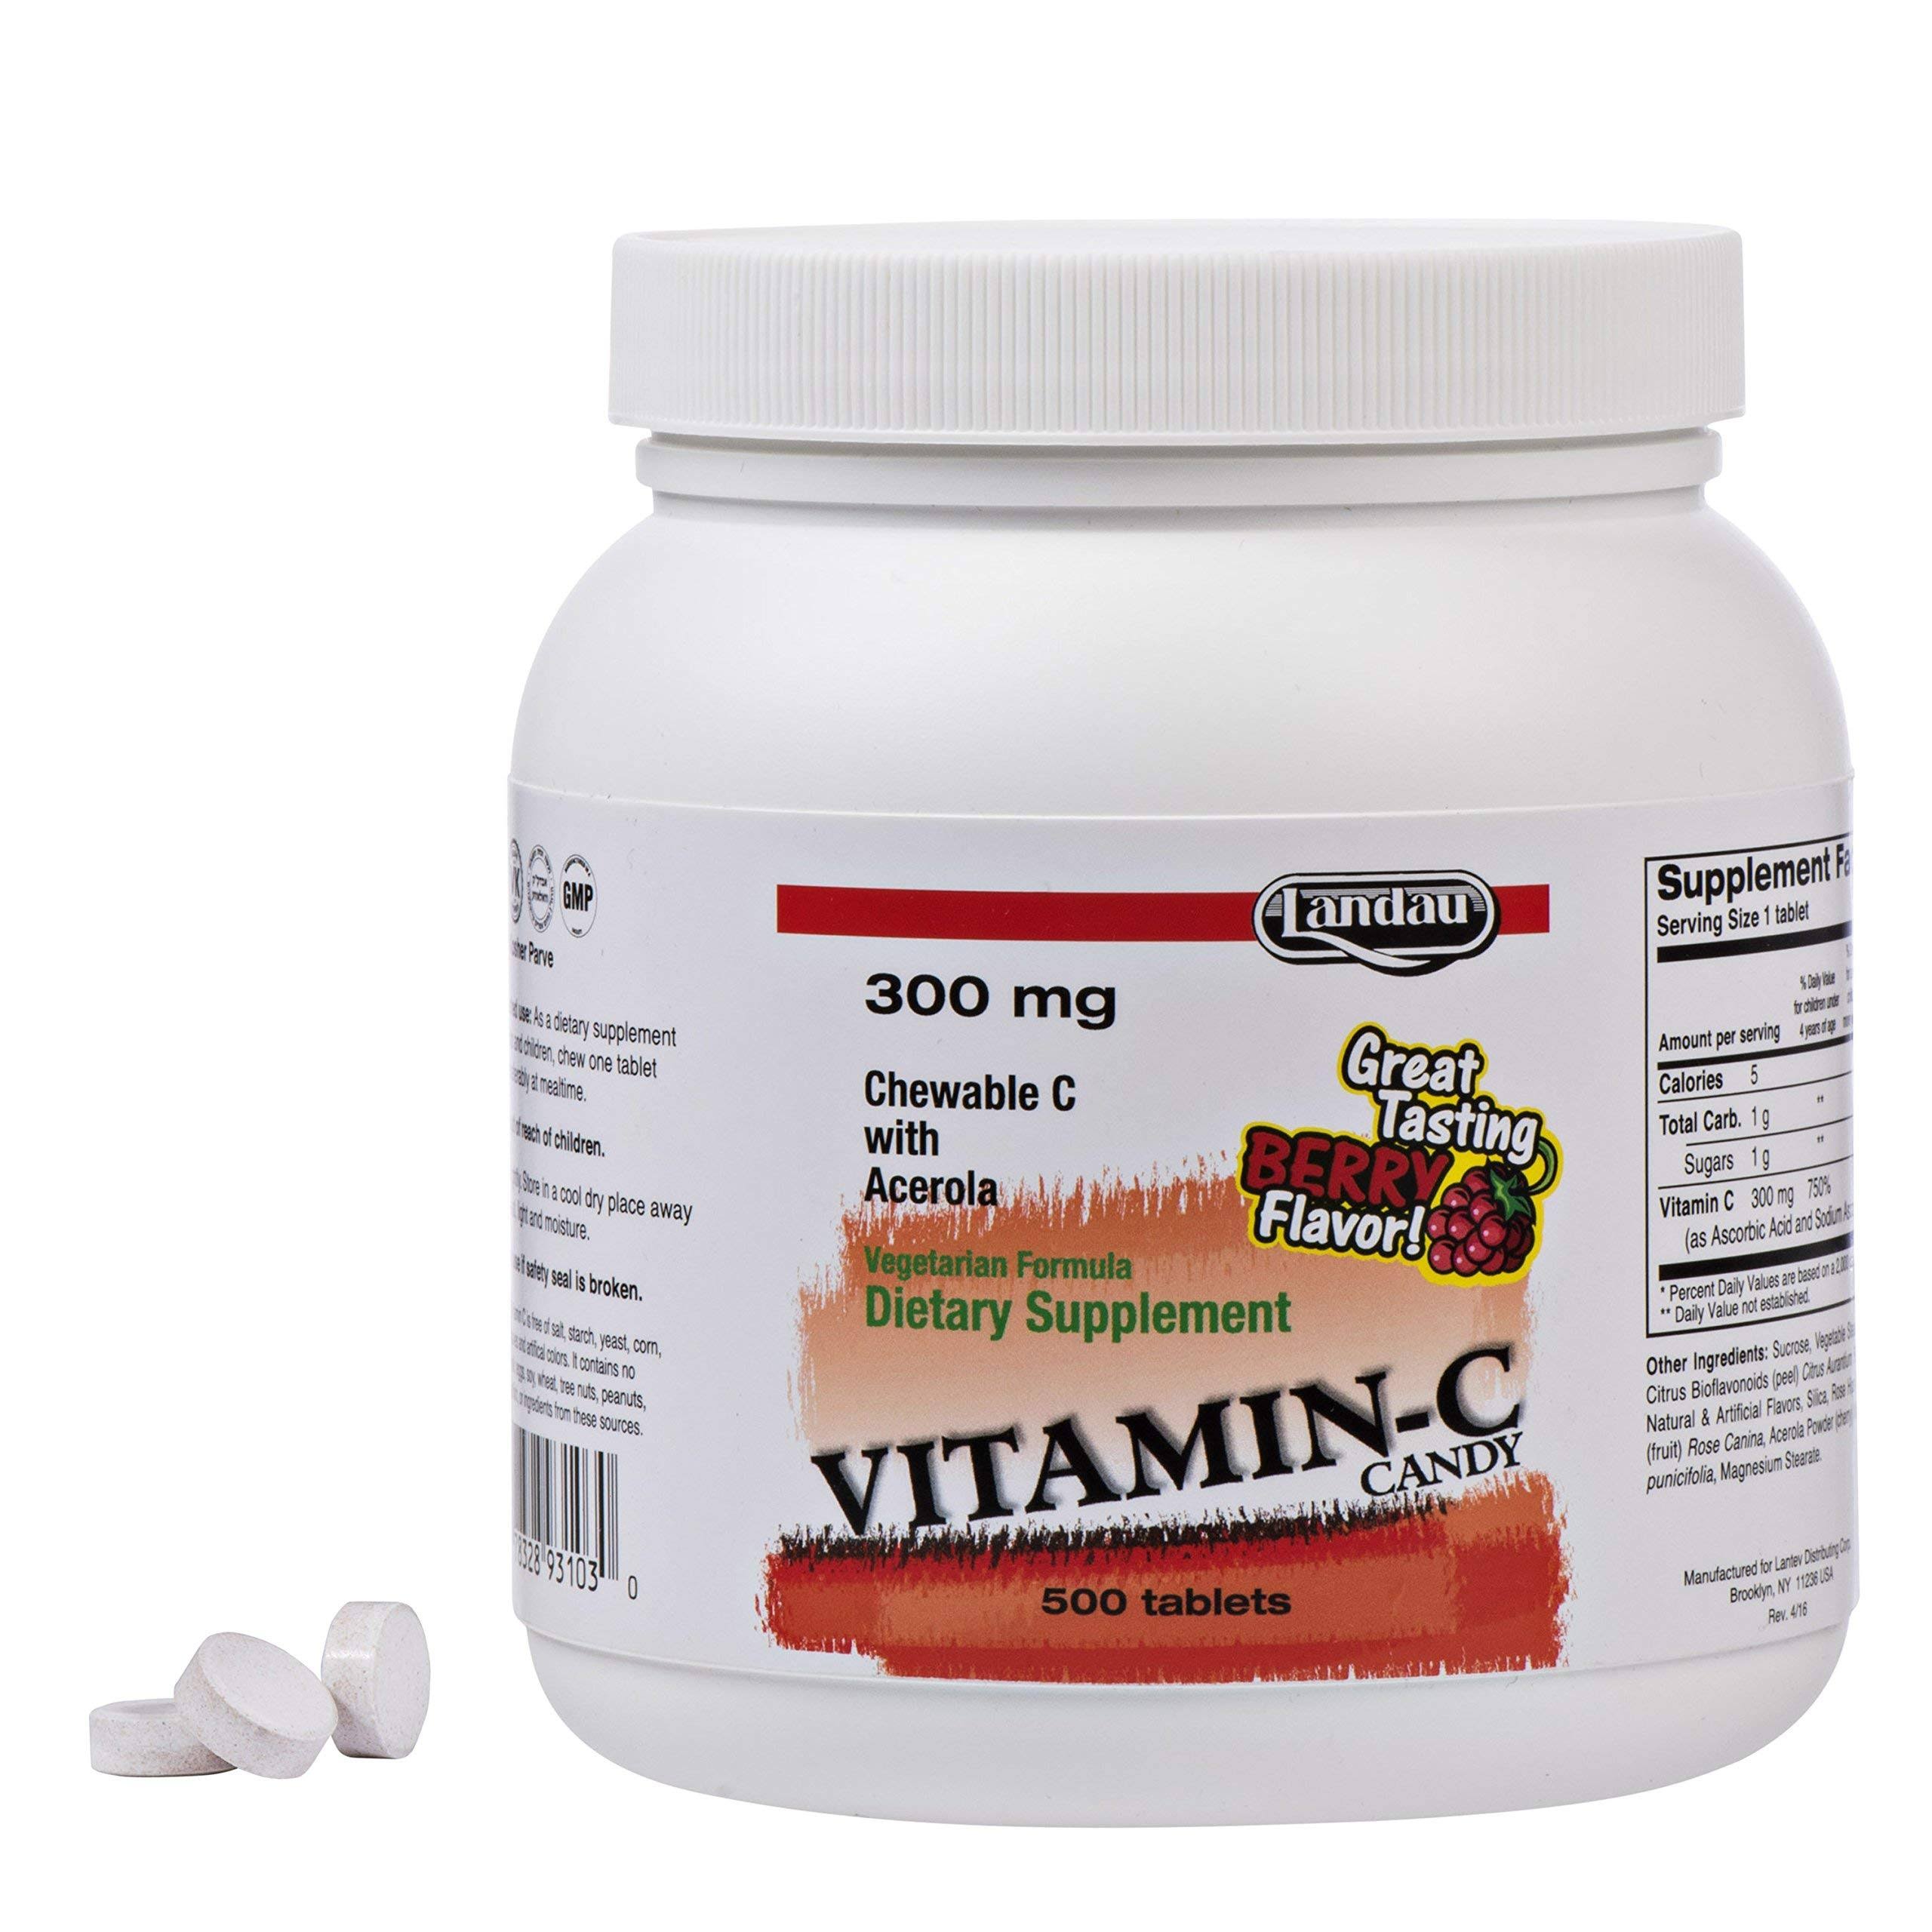 Landau Vitamin C Candy 300 mg Chewable Berry Flavor - 500 Tablets